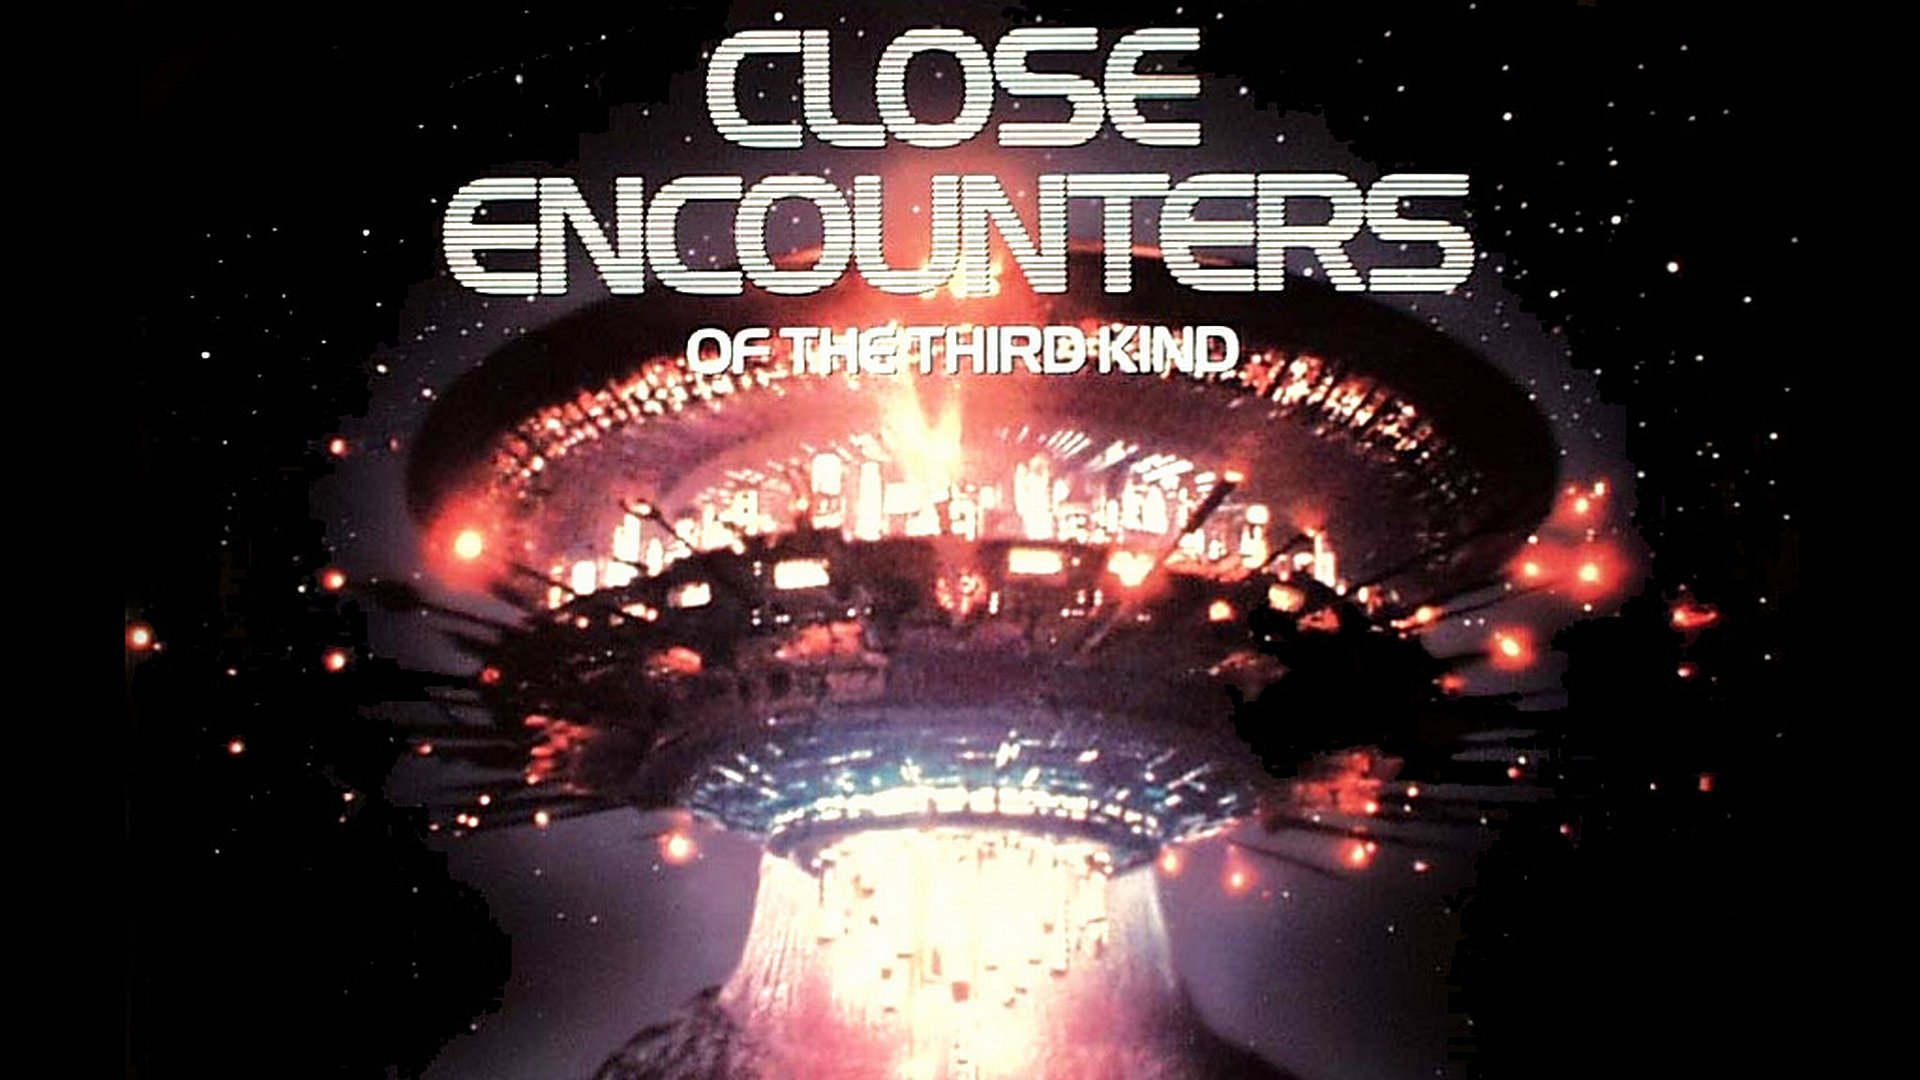 close encounters full movie